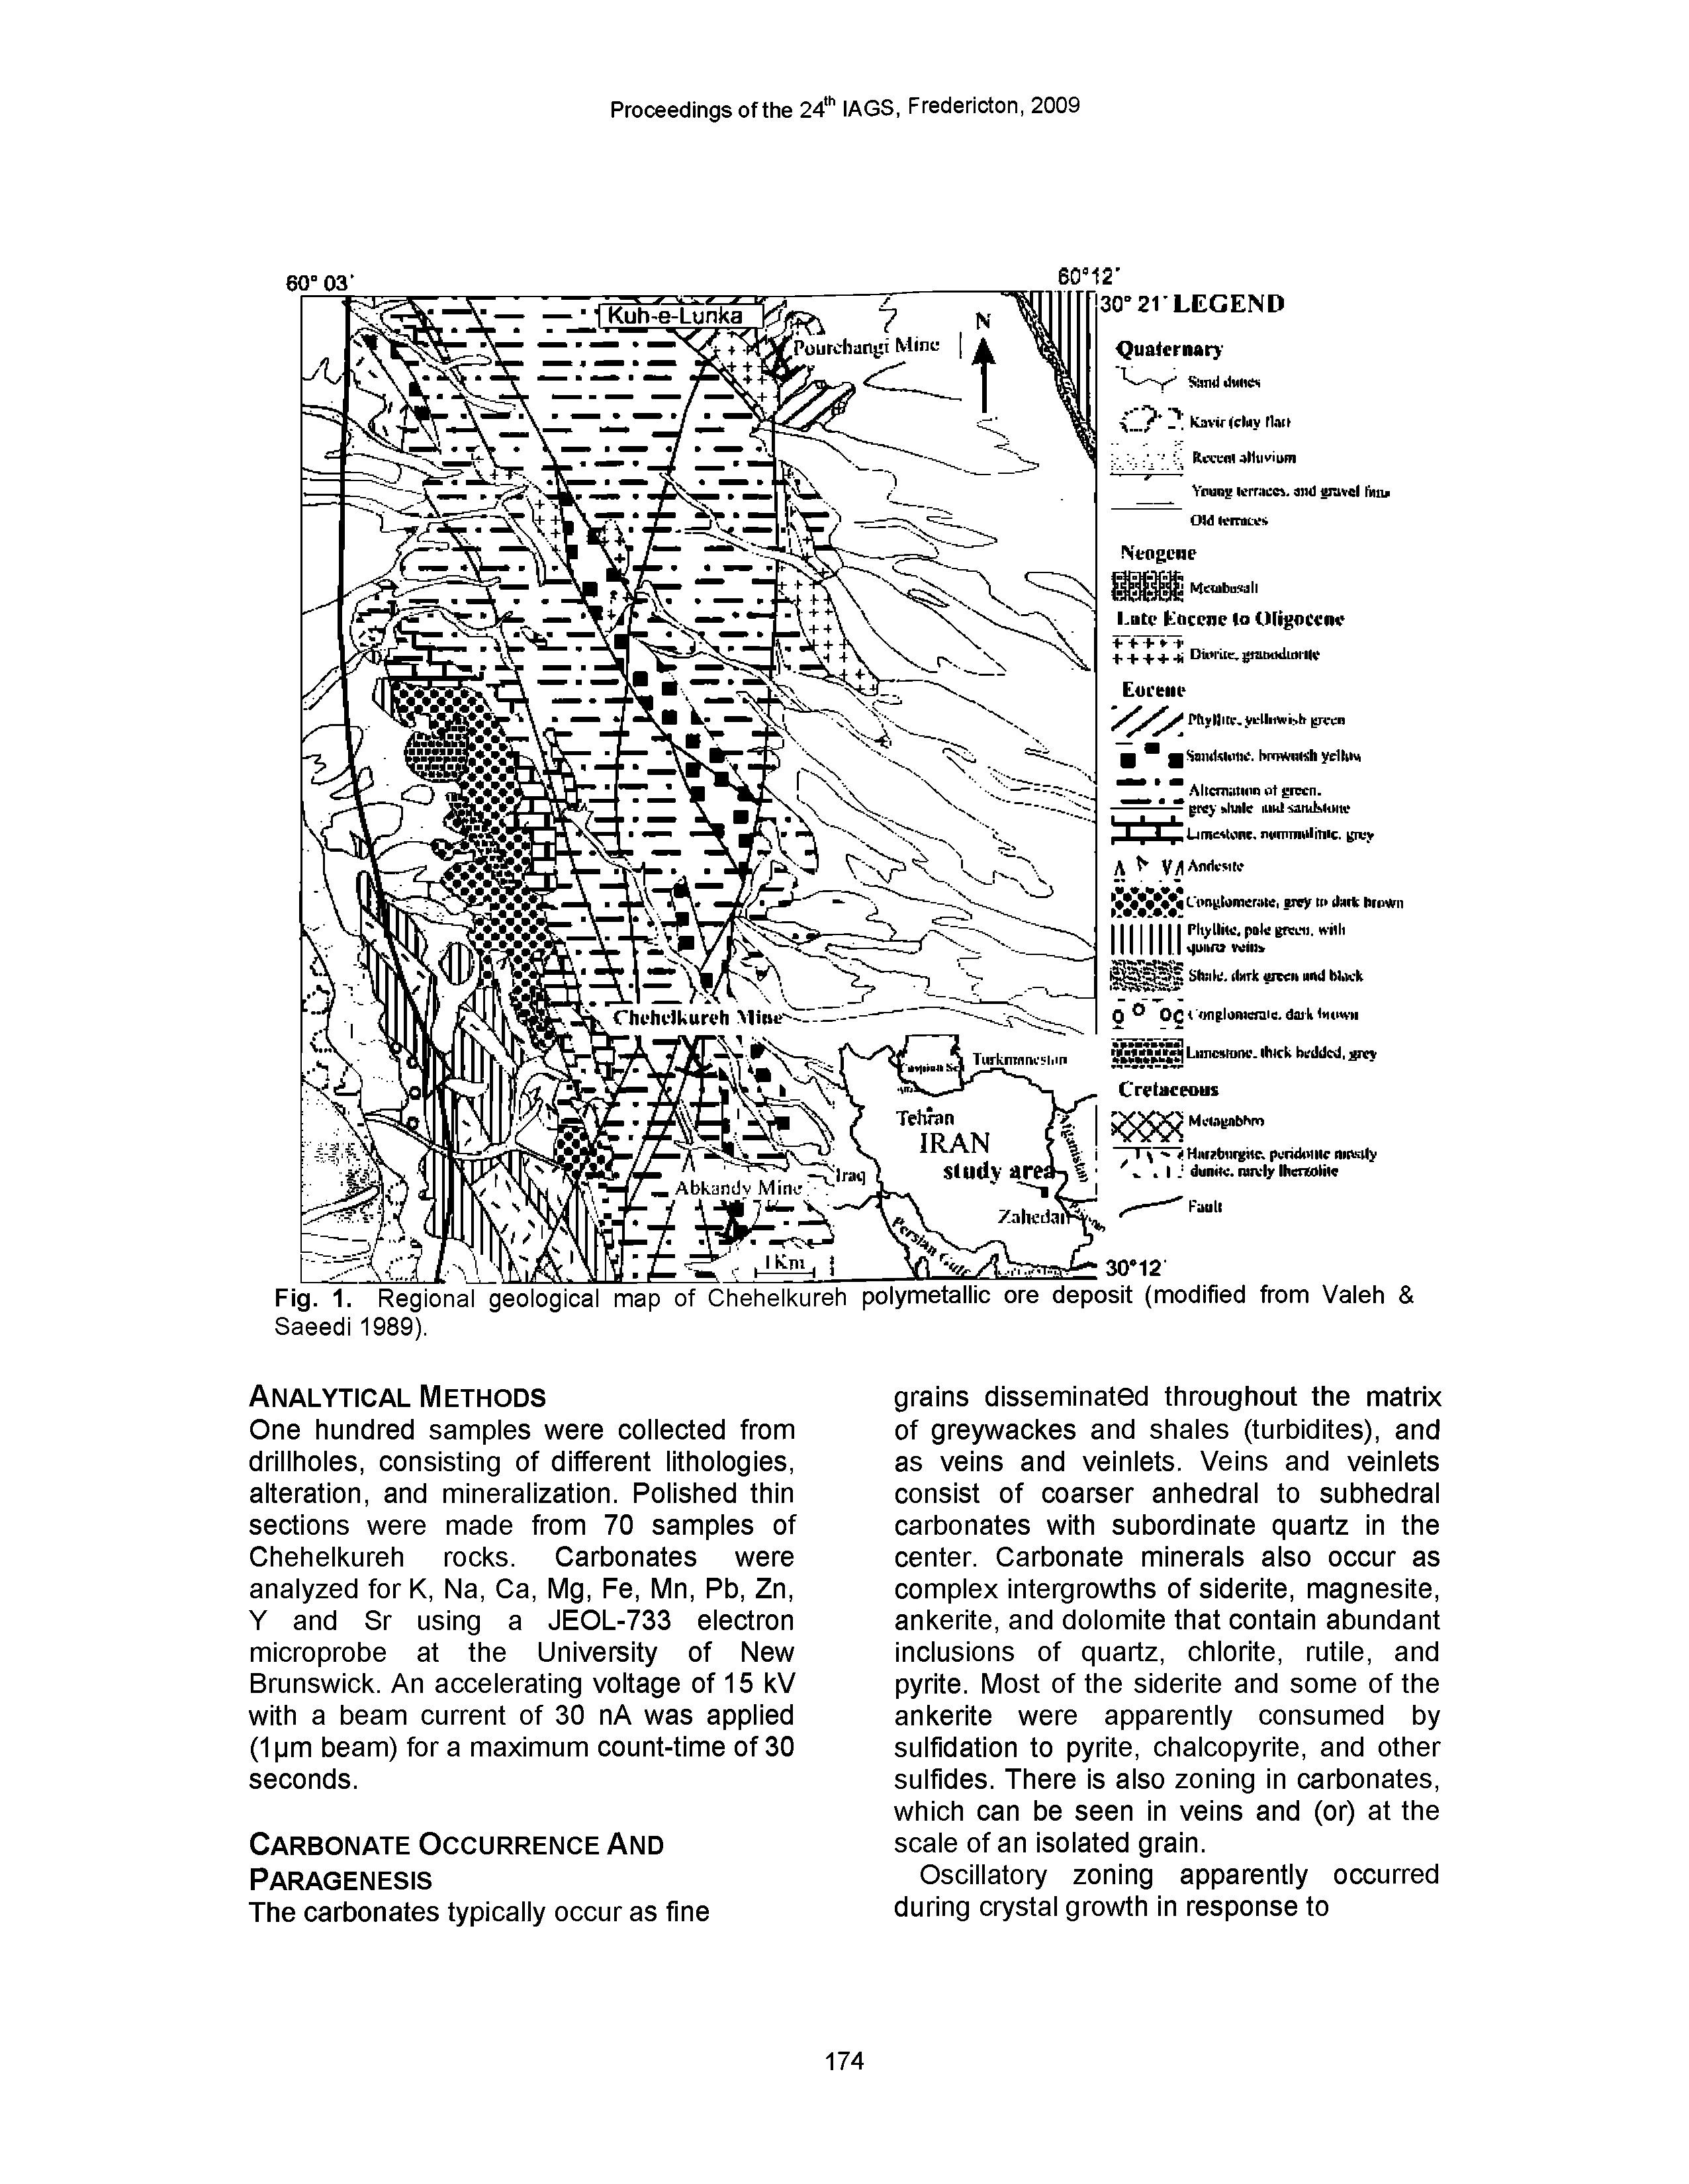 Fig. 1. Regional geological map of Chehelkureh polymetallic ore deposit (modified from Valeh Saeedi 1989).